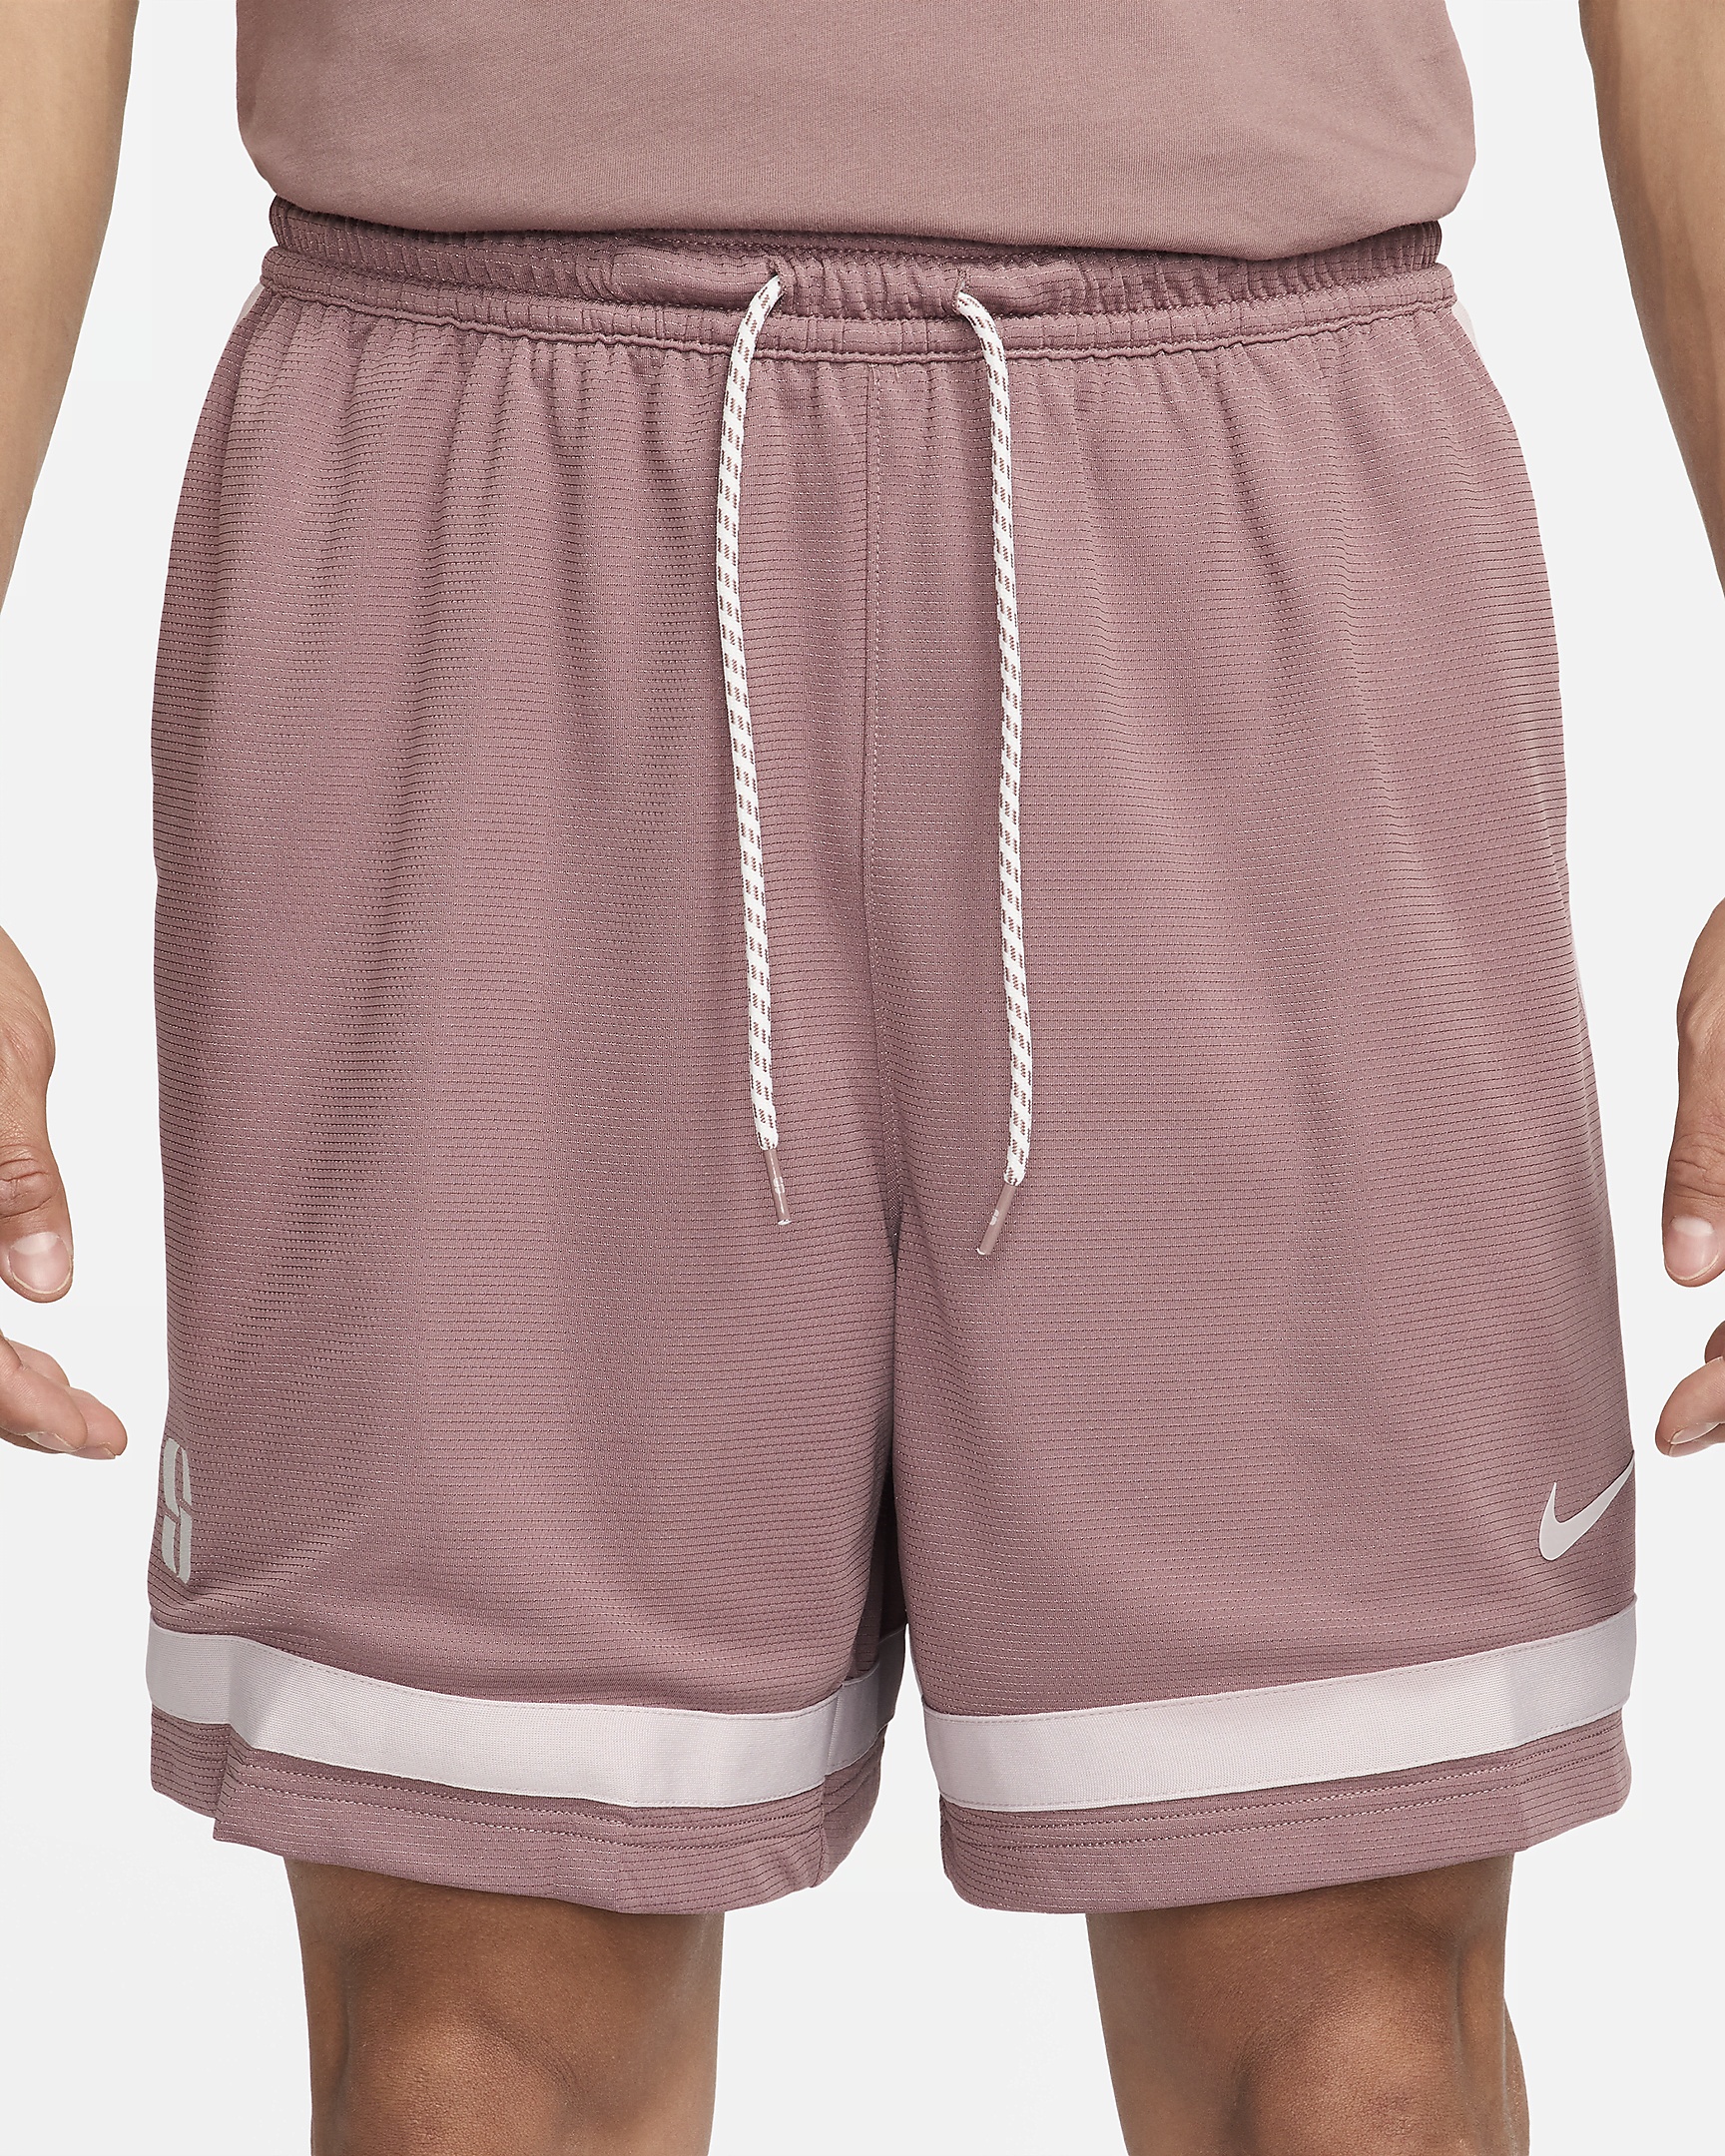 Nike Women's Sabrina Dri-FIT Basketball Shorts - 3